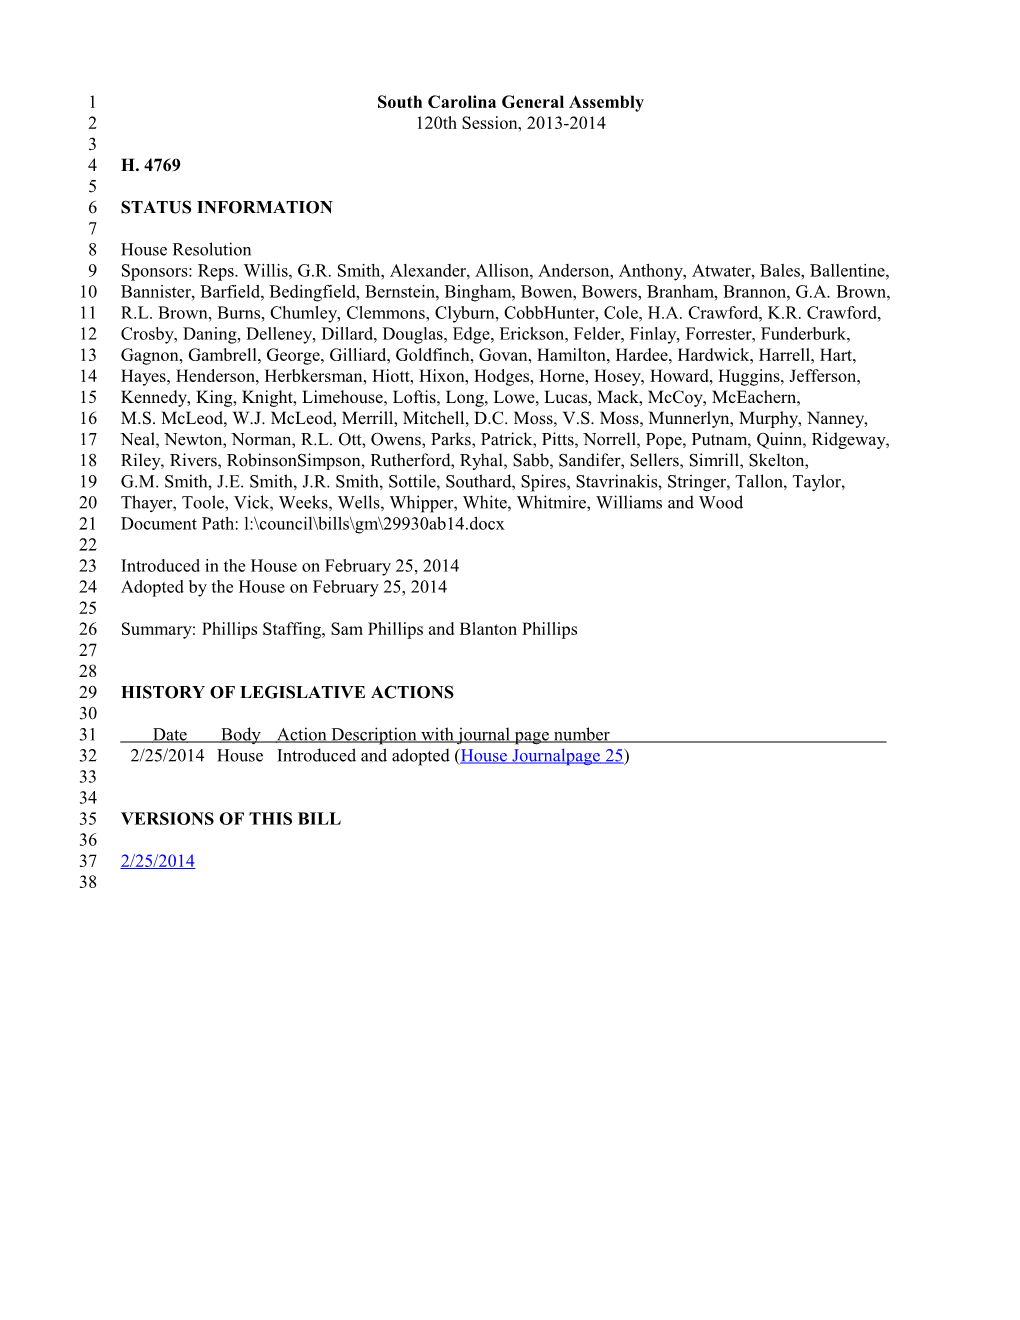 2013-2014 Bill 4769: Phillips Staffing, Sam Phillips and Blanton Phillips - South Carolina